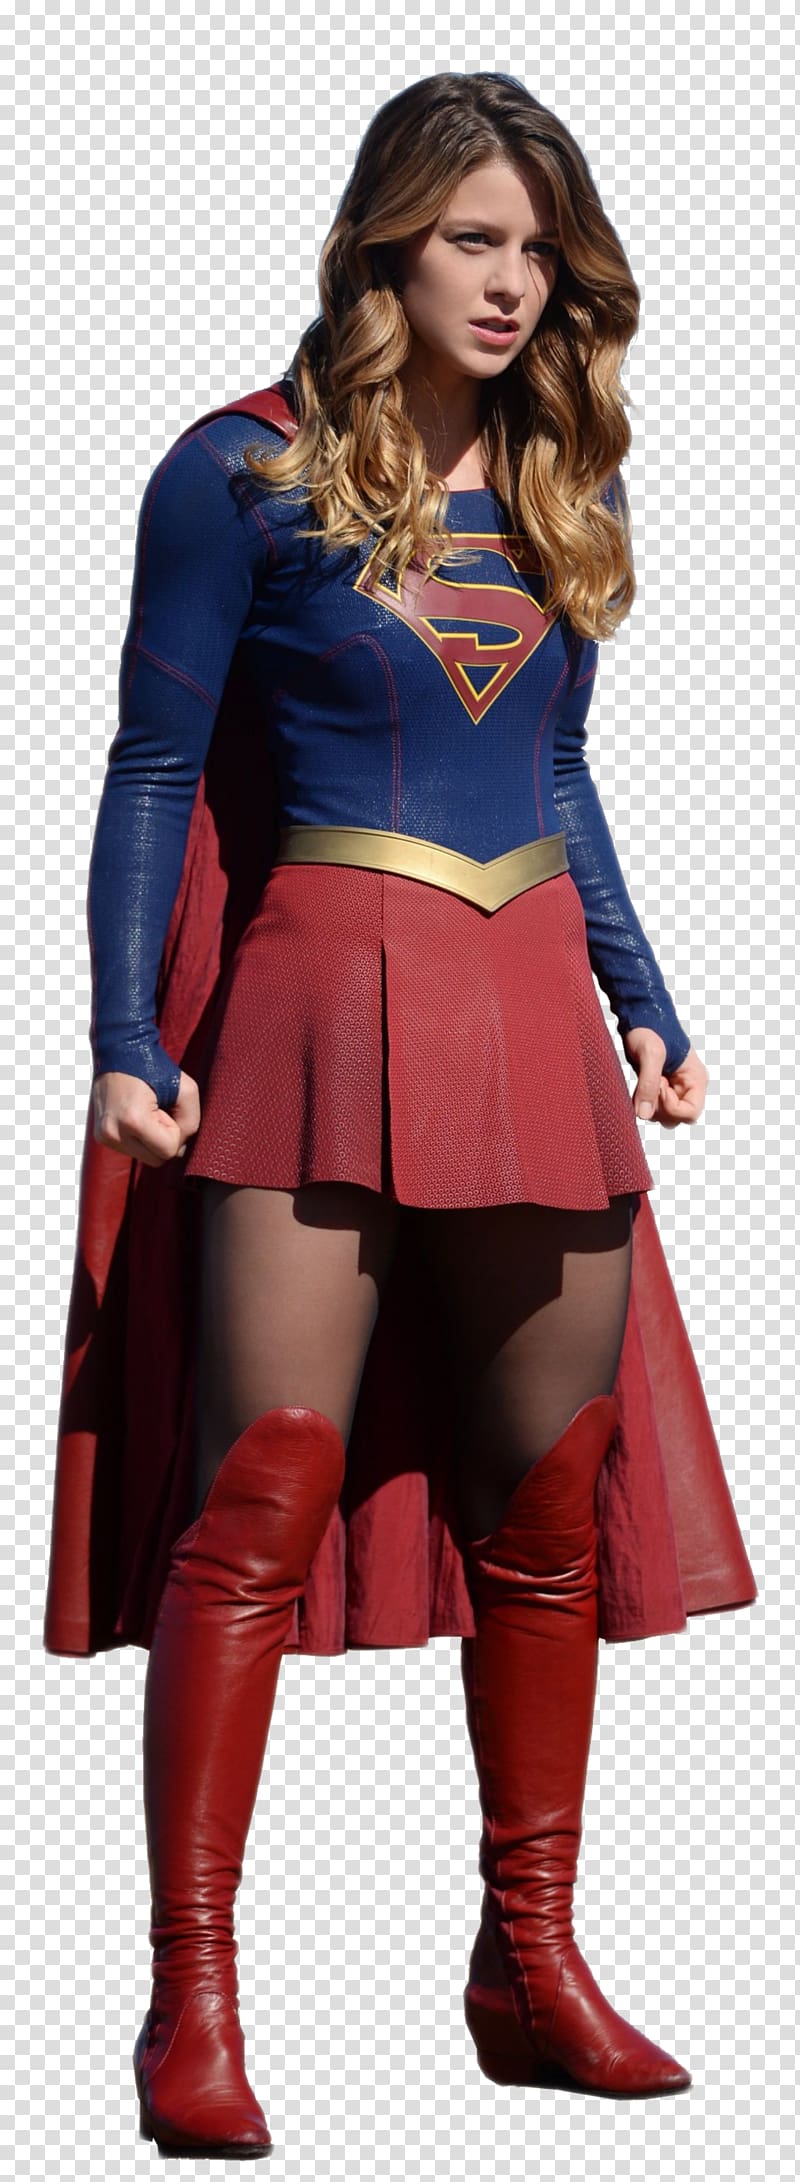 Melissa Benoist Supergirl Lar Gand Computer Icons, Super Girl transparent background PNG clipart